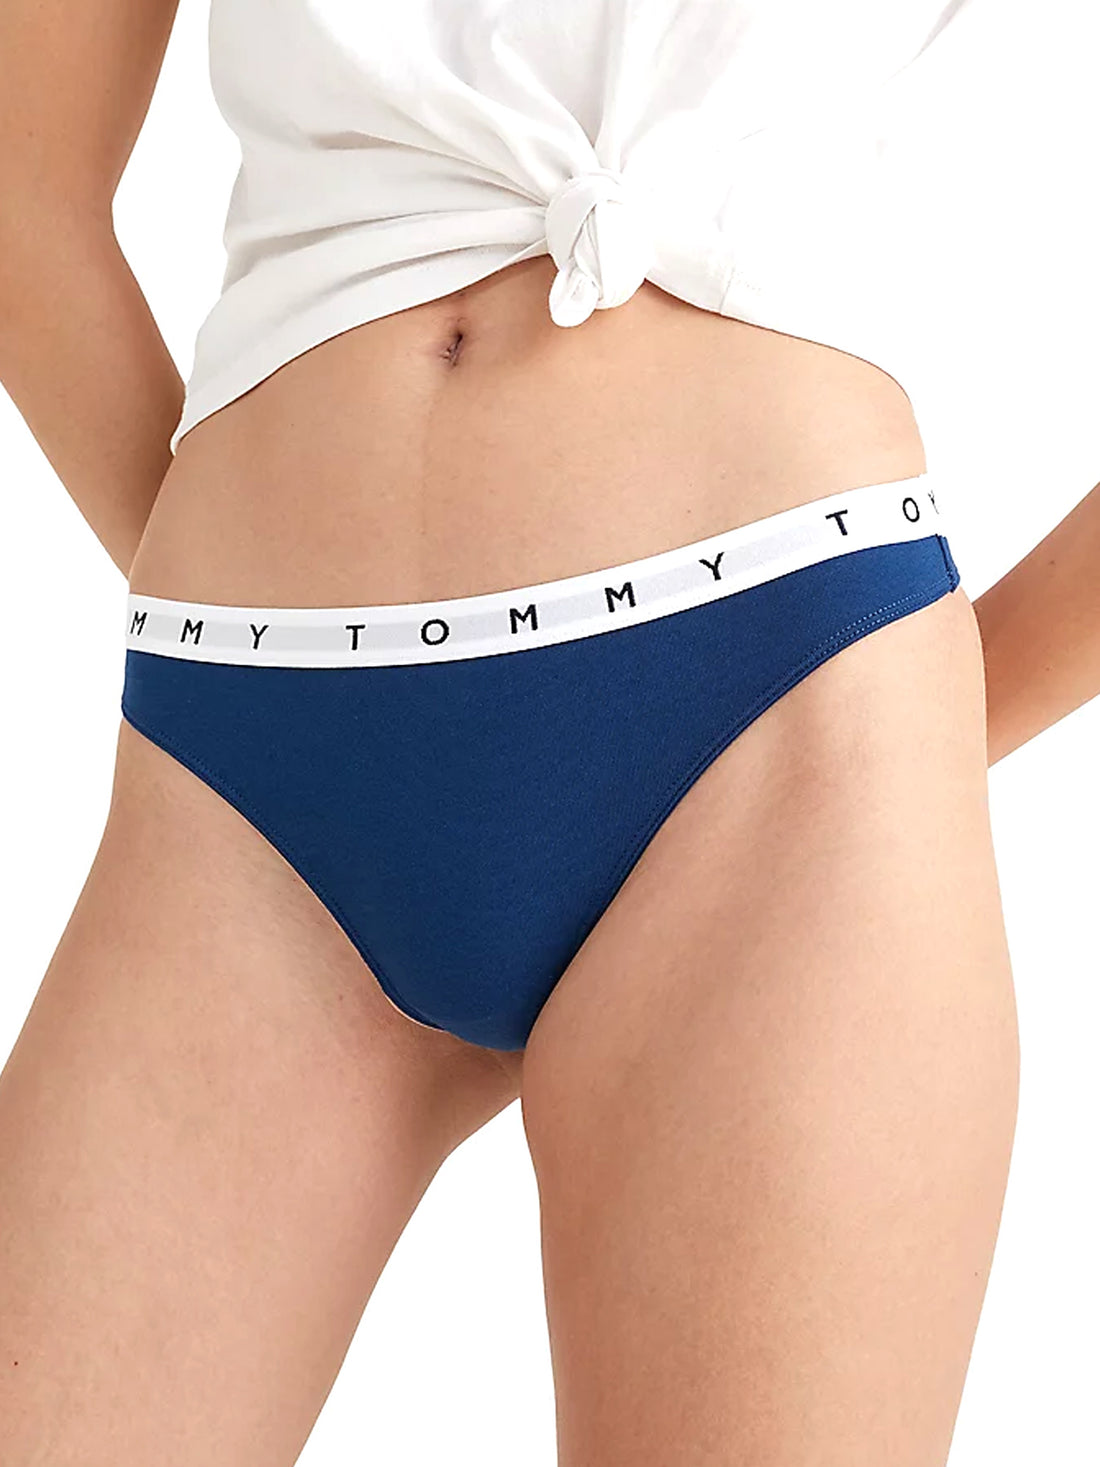 Perizomi Rosso Tommy Hilfiger Underwear